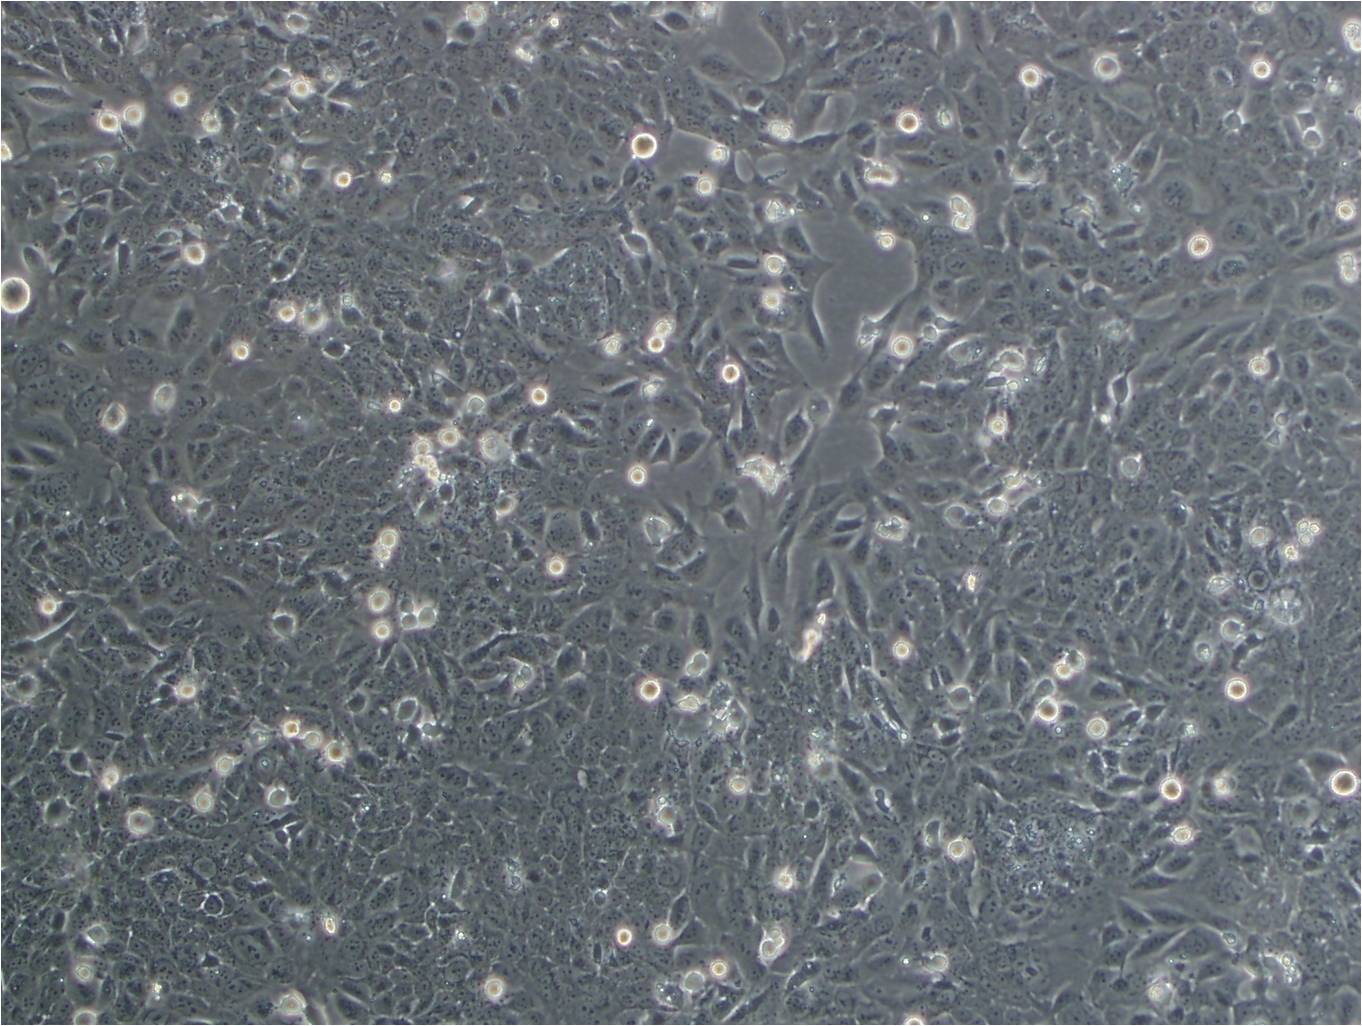 G-Olig2 cell line小鼠胚胎干细胞系